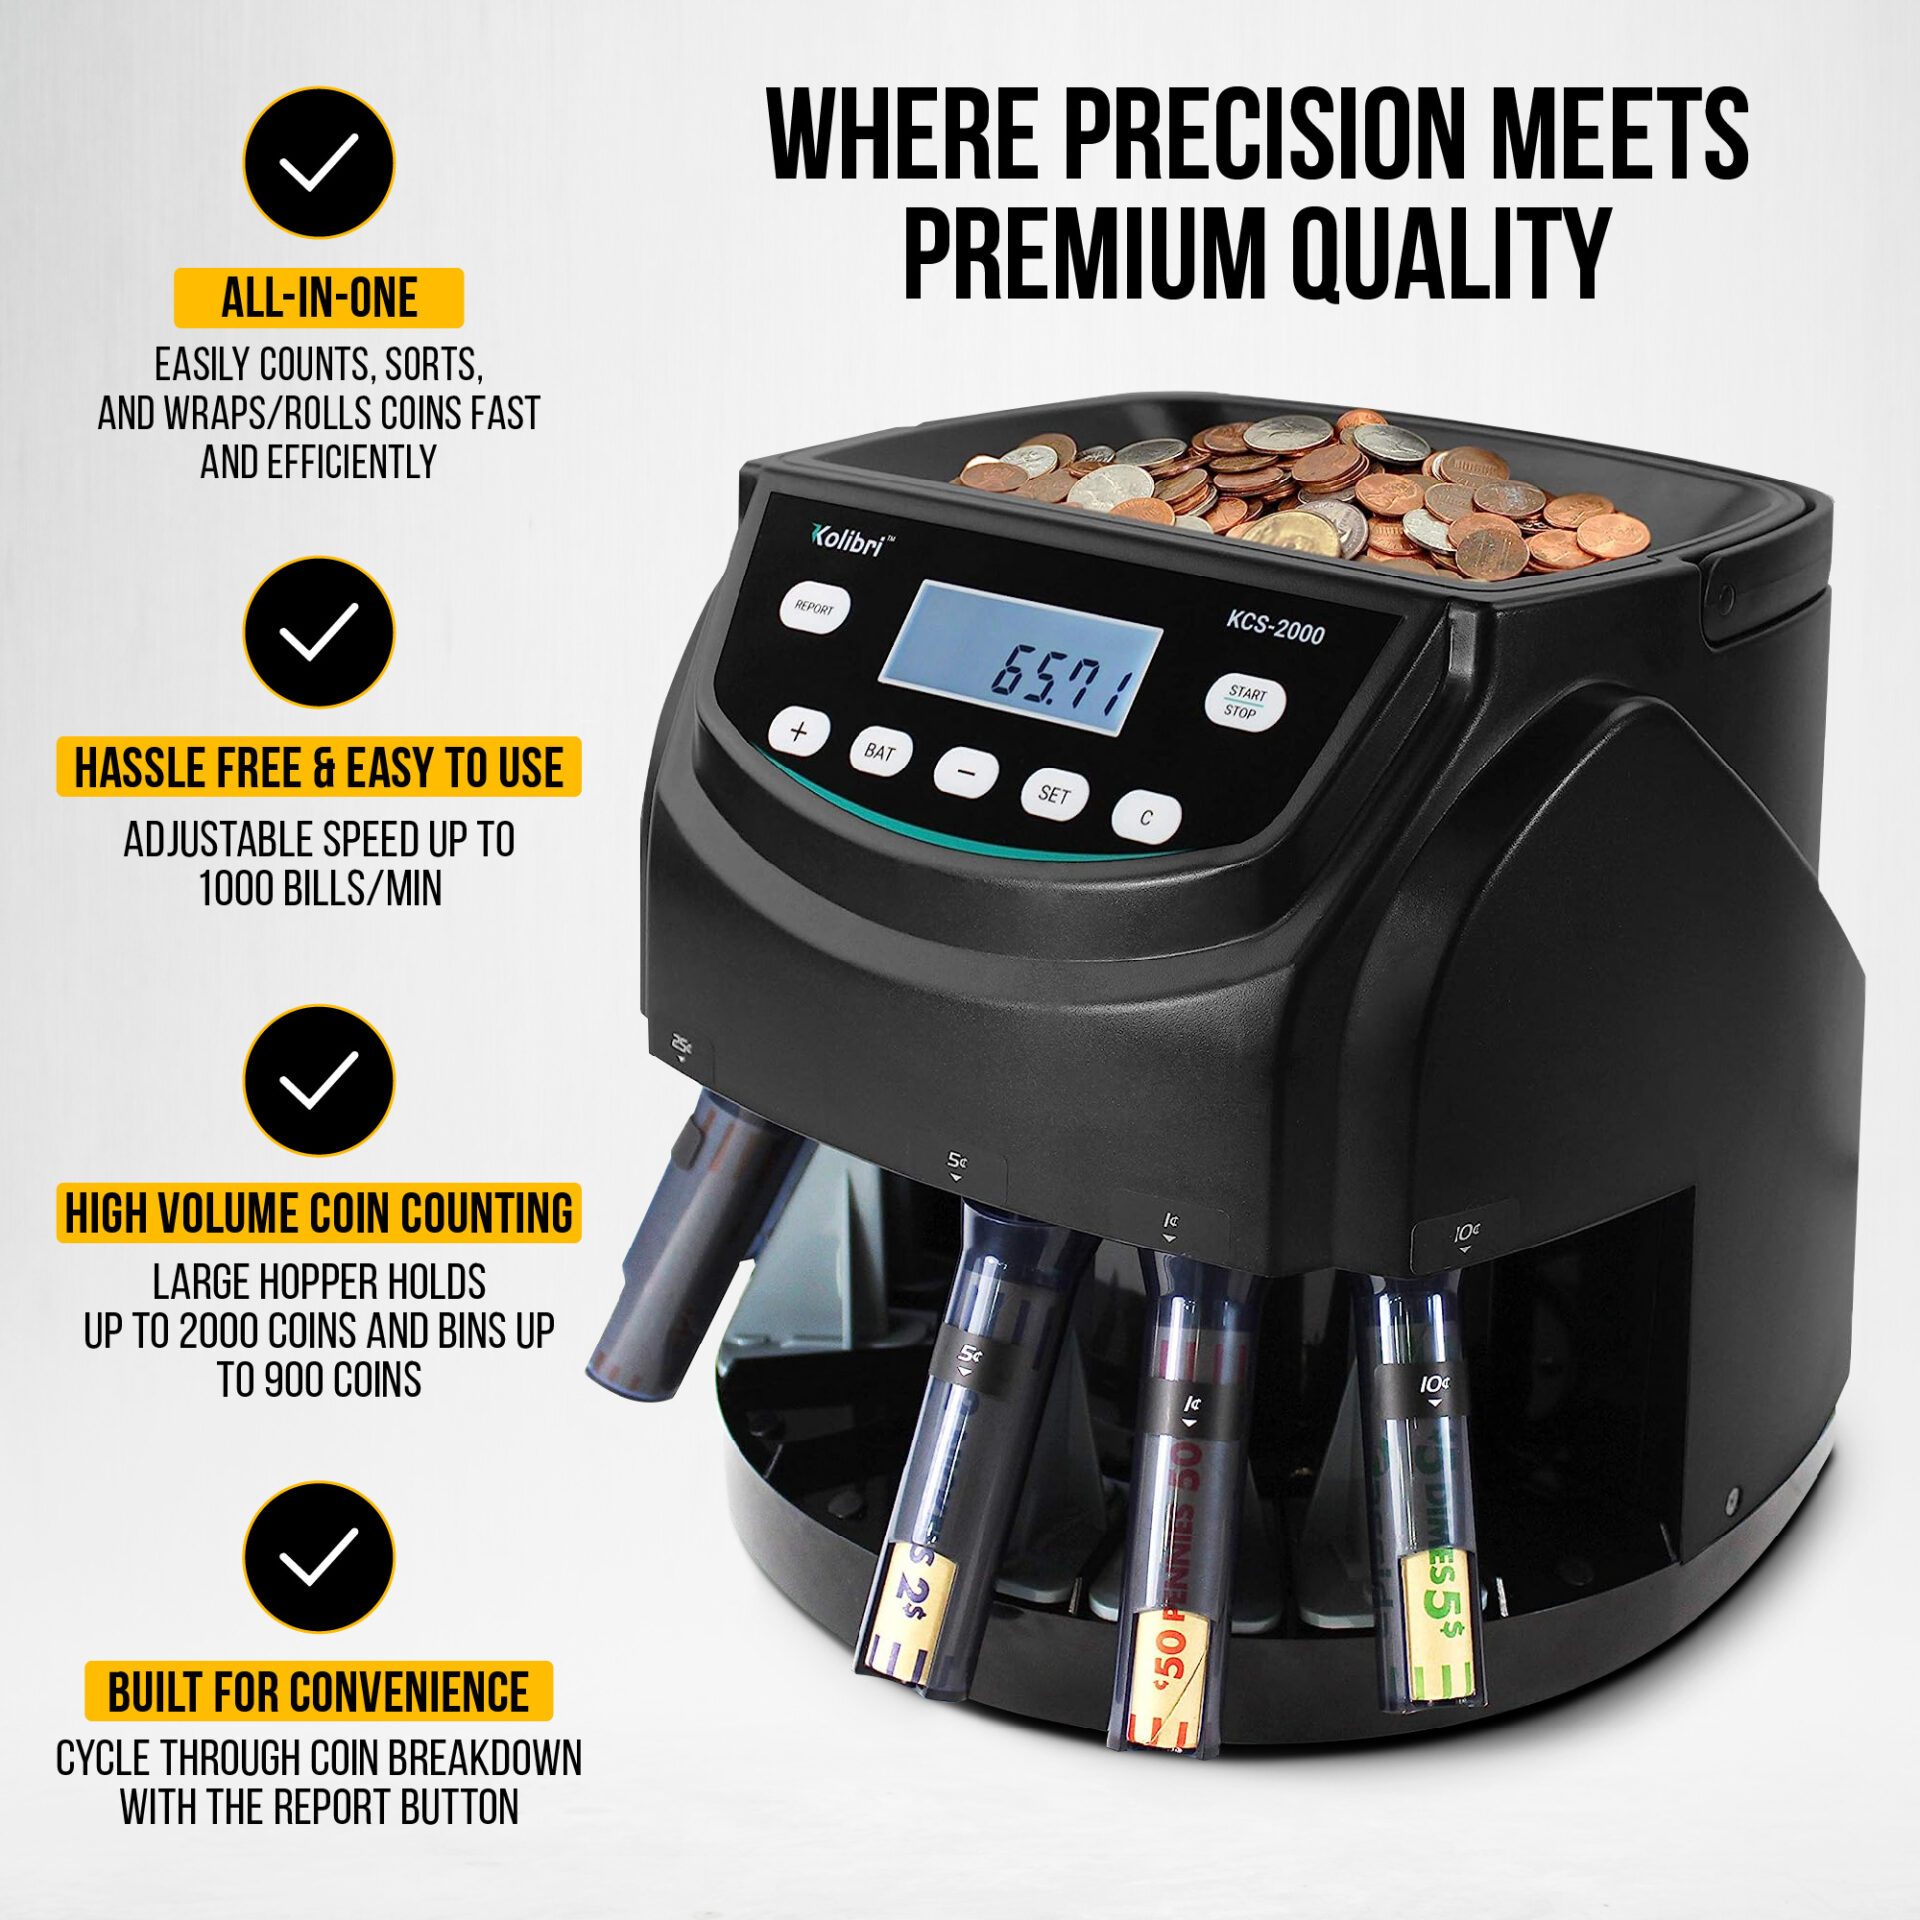 Where Precision Meets Premium Quality